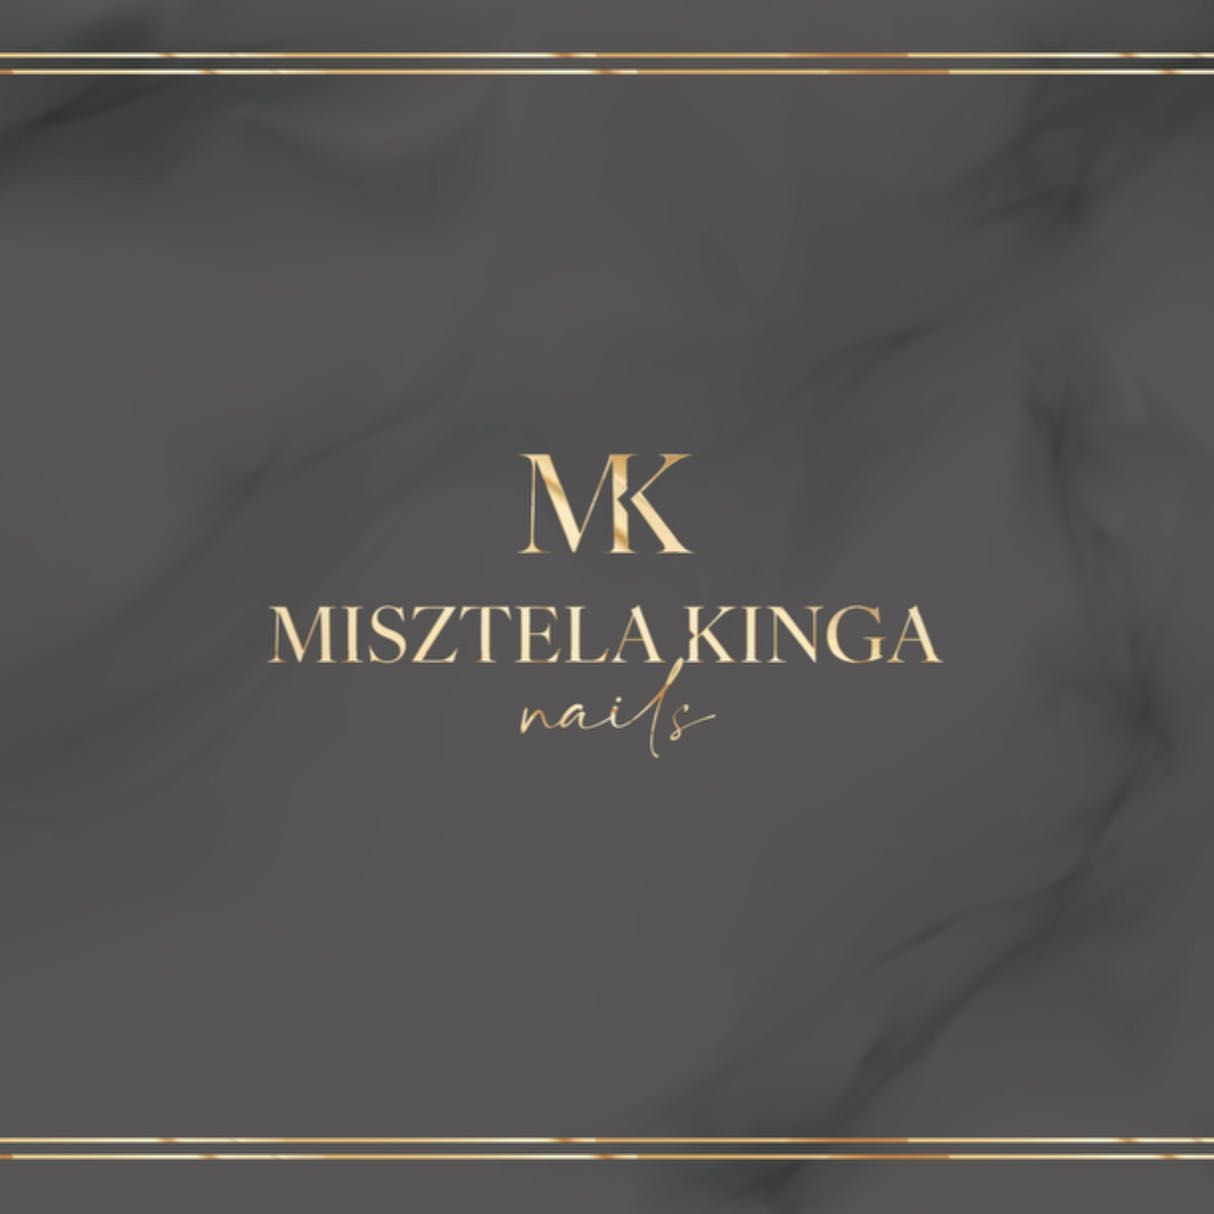 Misztela Kinga Nails, Warszawska, 81/83 lok.1, 42-200, Częstochowa